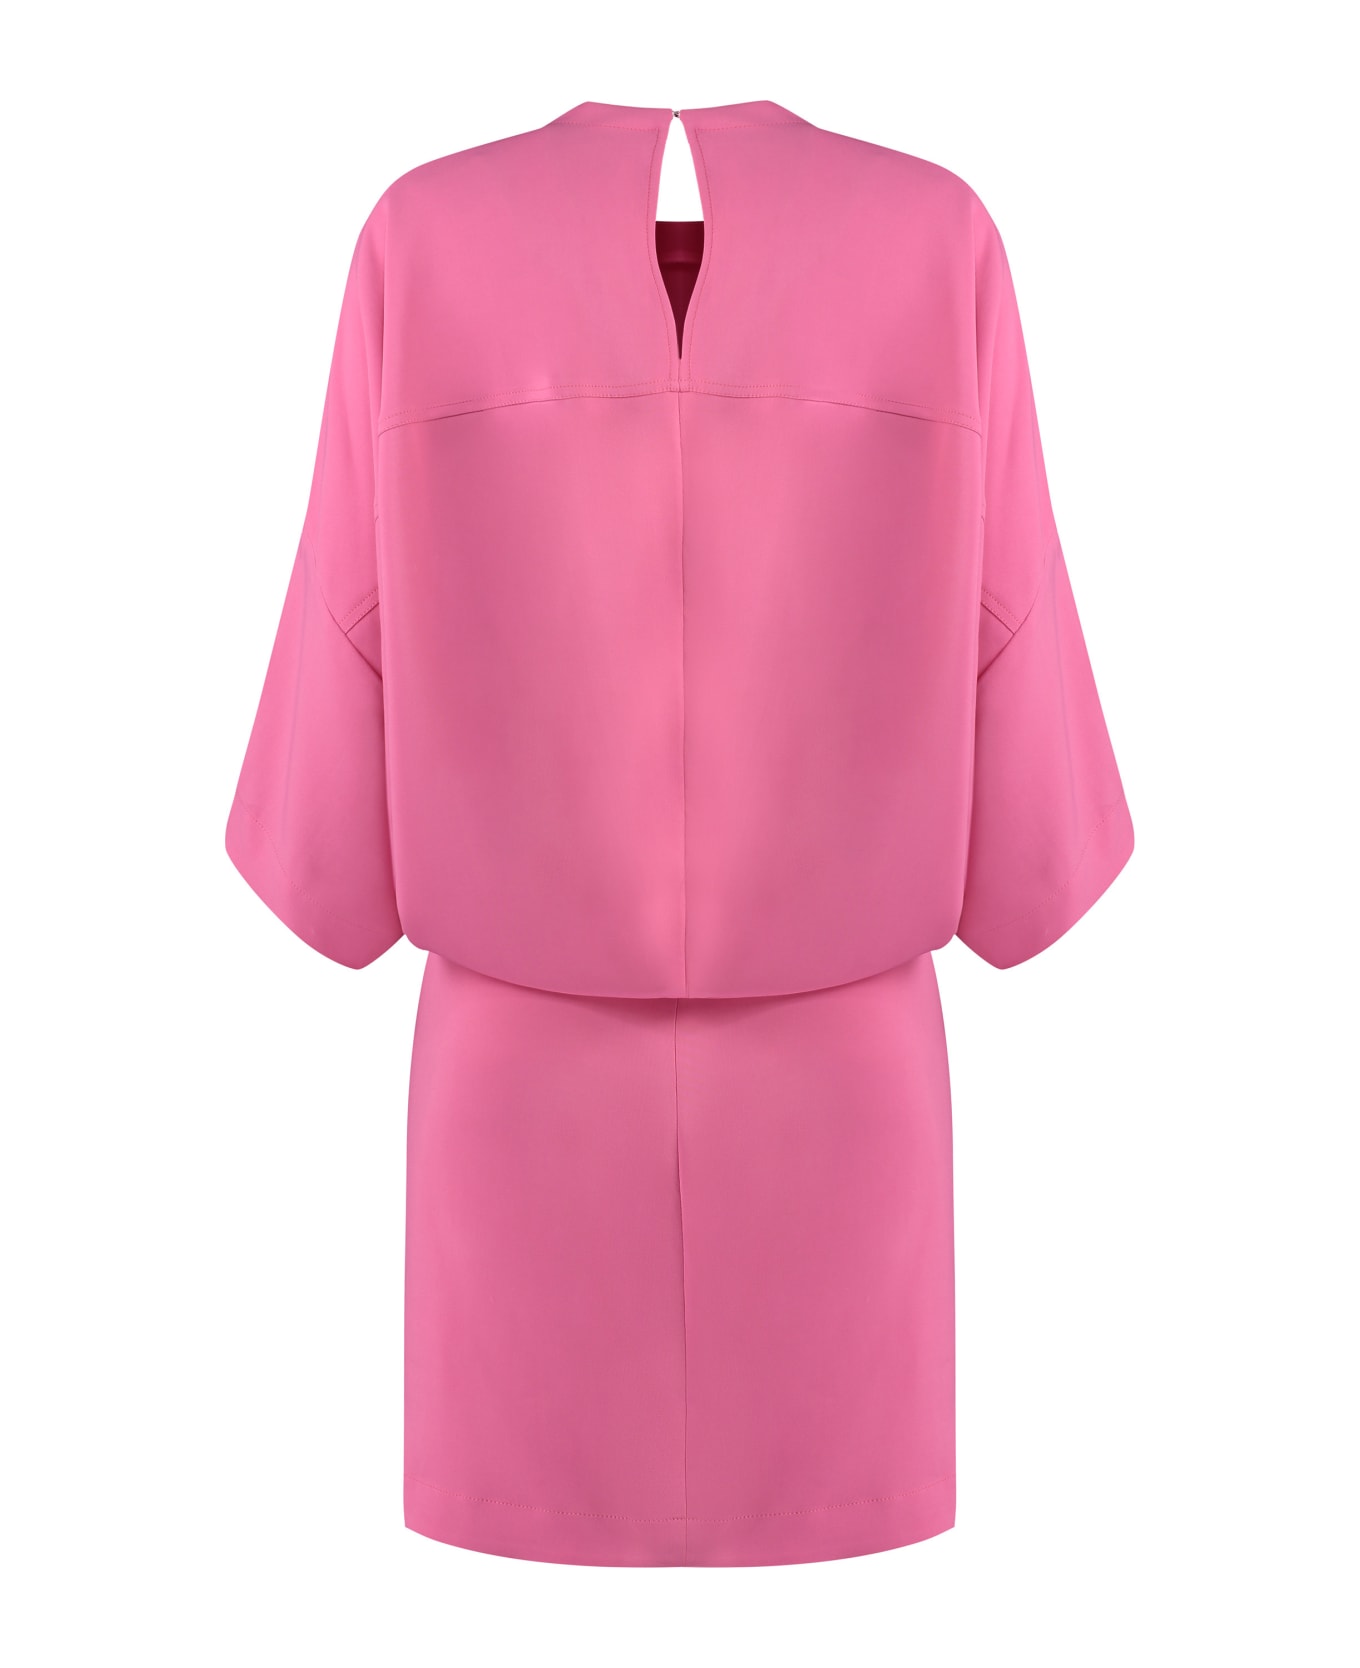 Stella McCartney Cape Dress - Pink